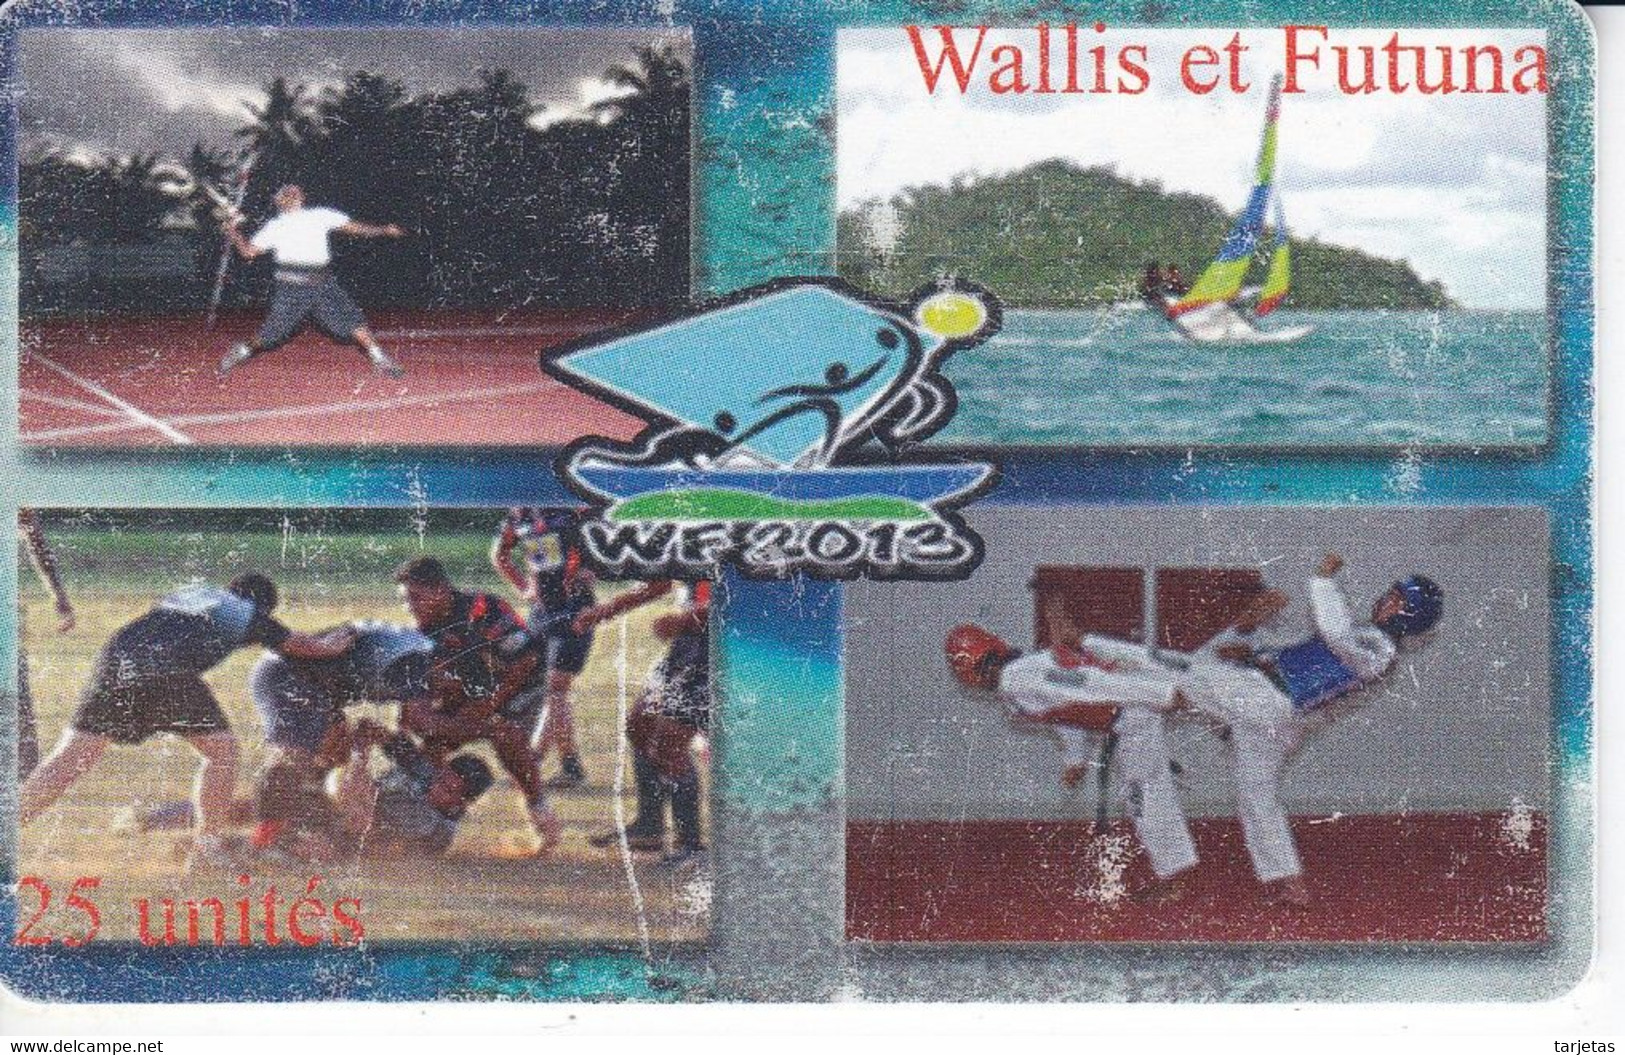 TARJETA DE WALLIS ET FUTUNA DE 25 UNITES DE WF 2013 DEL AÑO 2013 (DEPORTE-SPORT) - Wallis Und Futuna